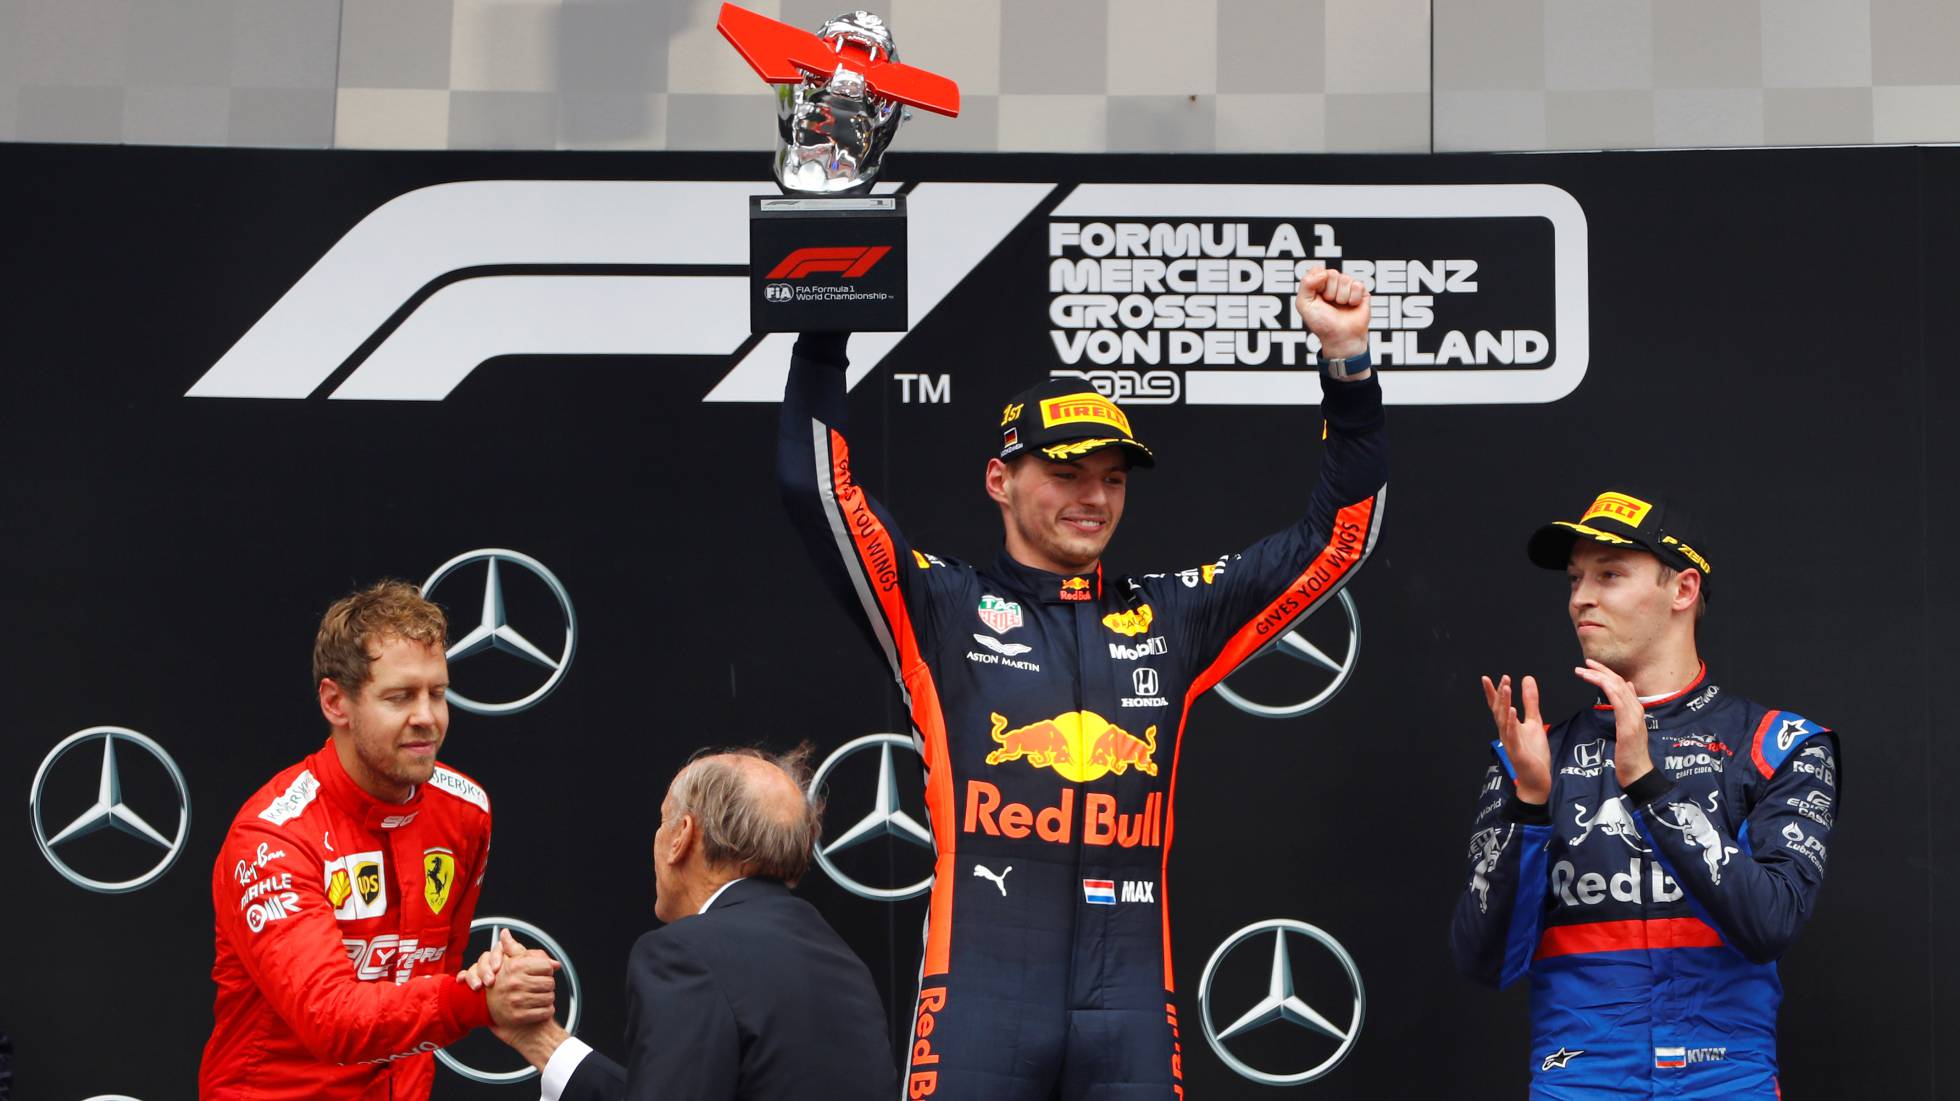 Max Verstappen reina en el caos del GP de Hockenheim